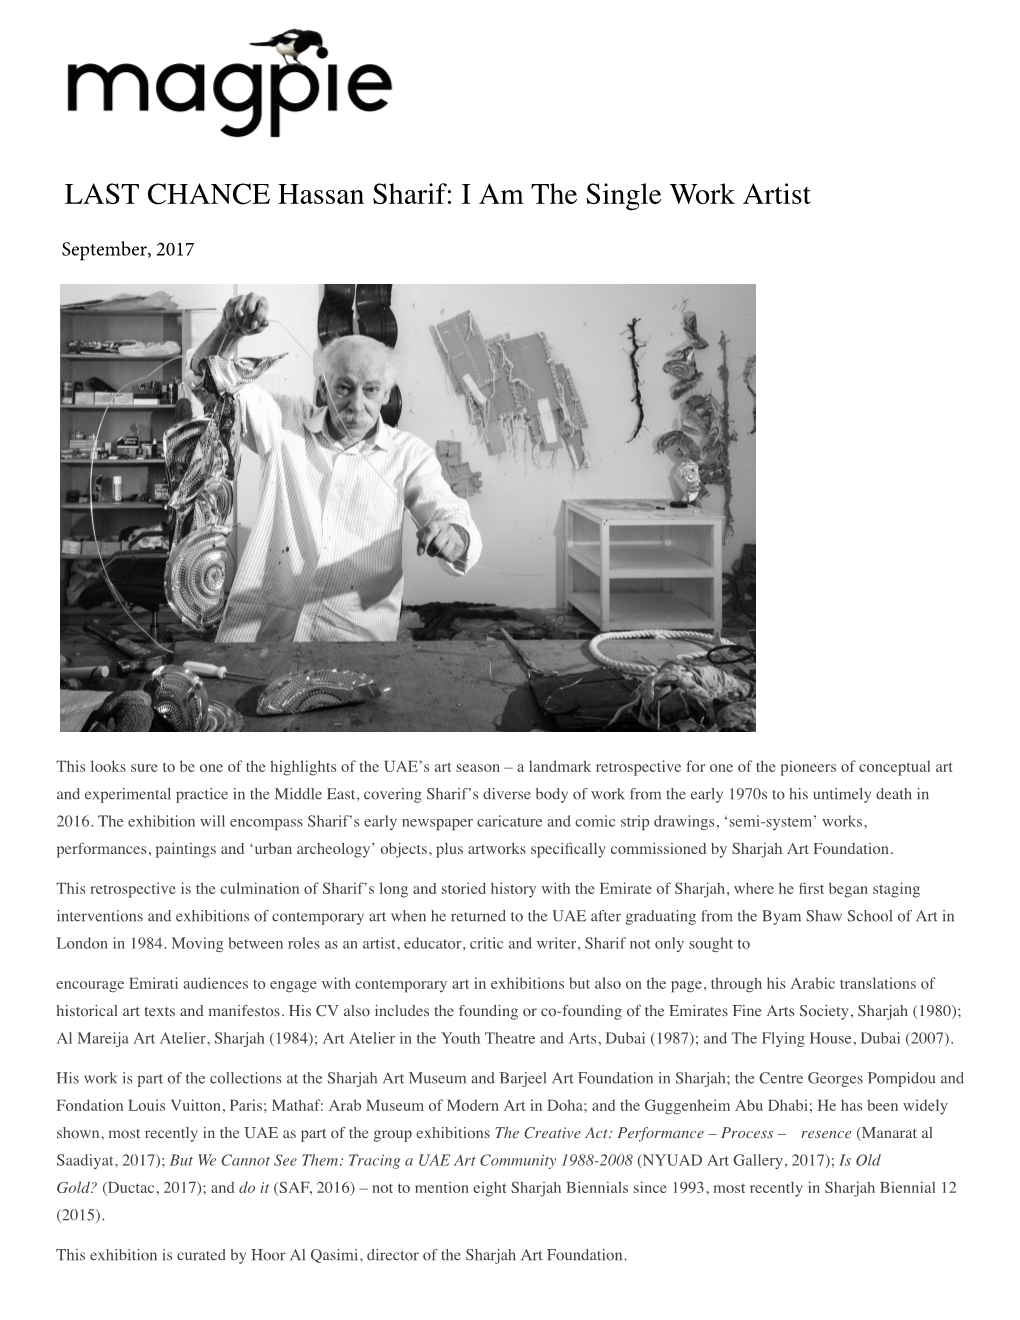 LAST CHANCE Hassan Sharif: I Am the Single Work Artist